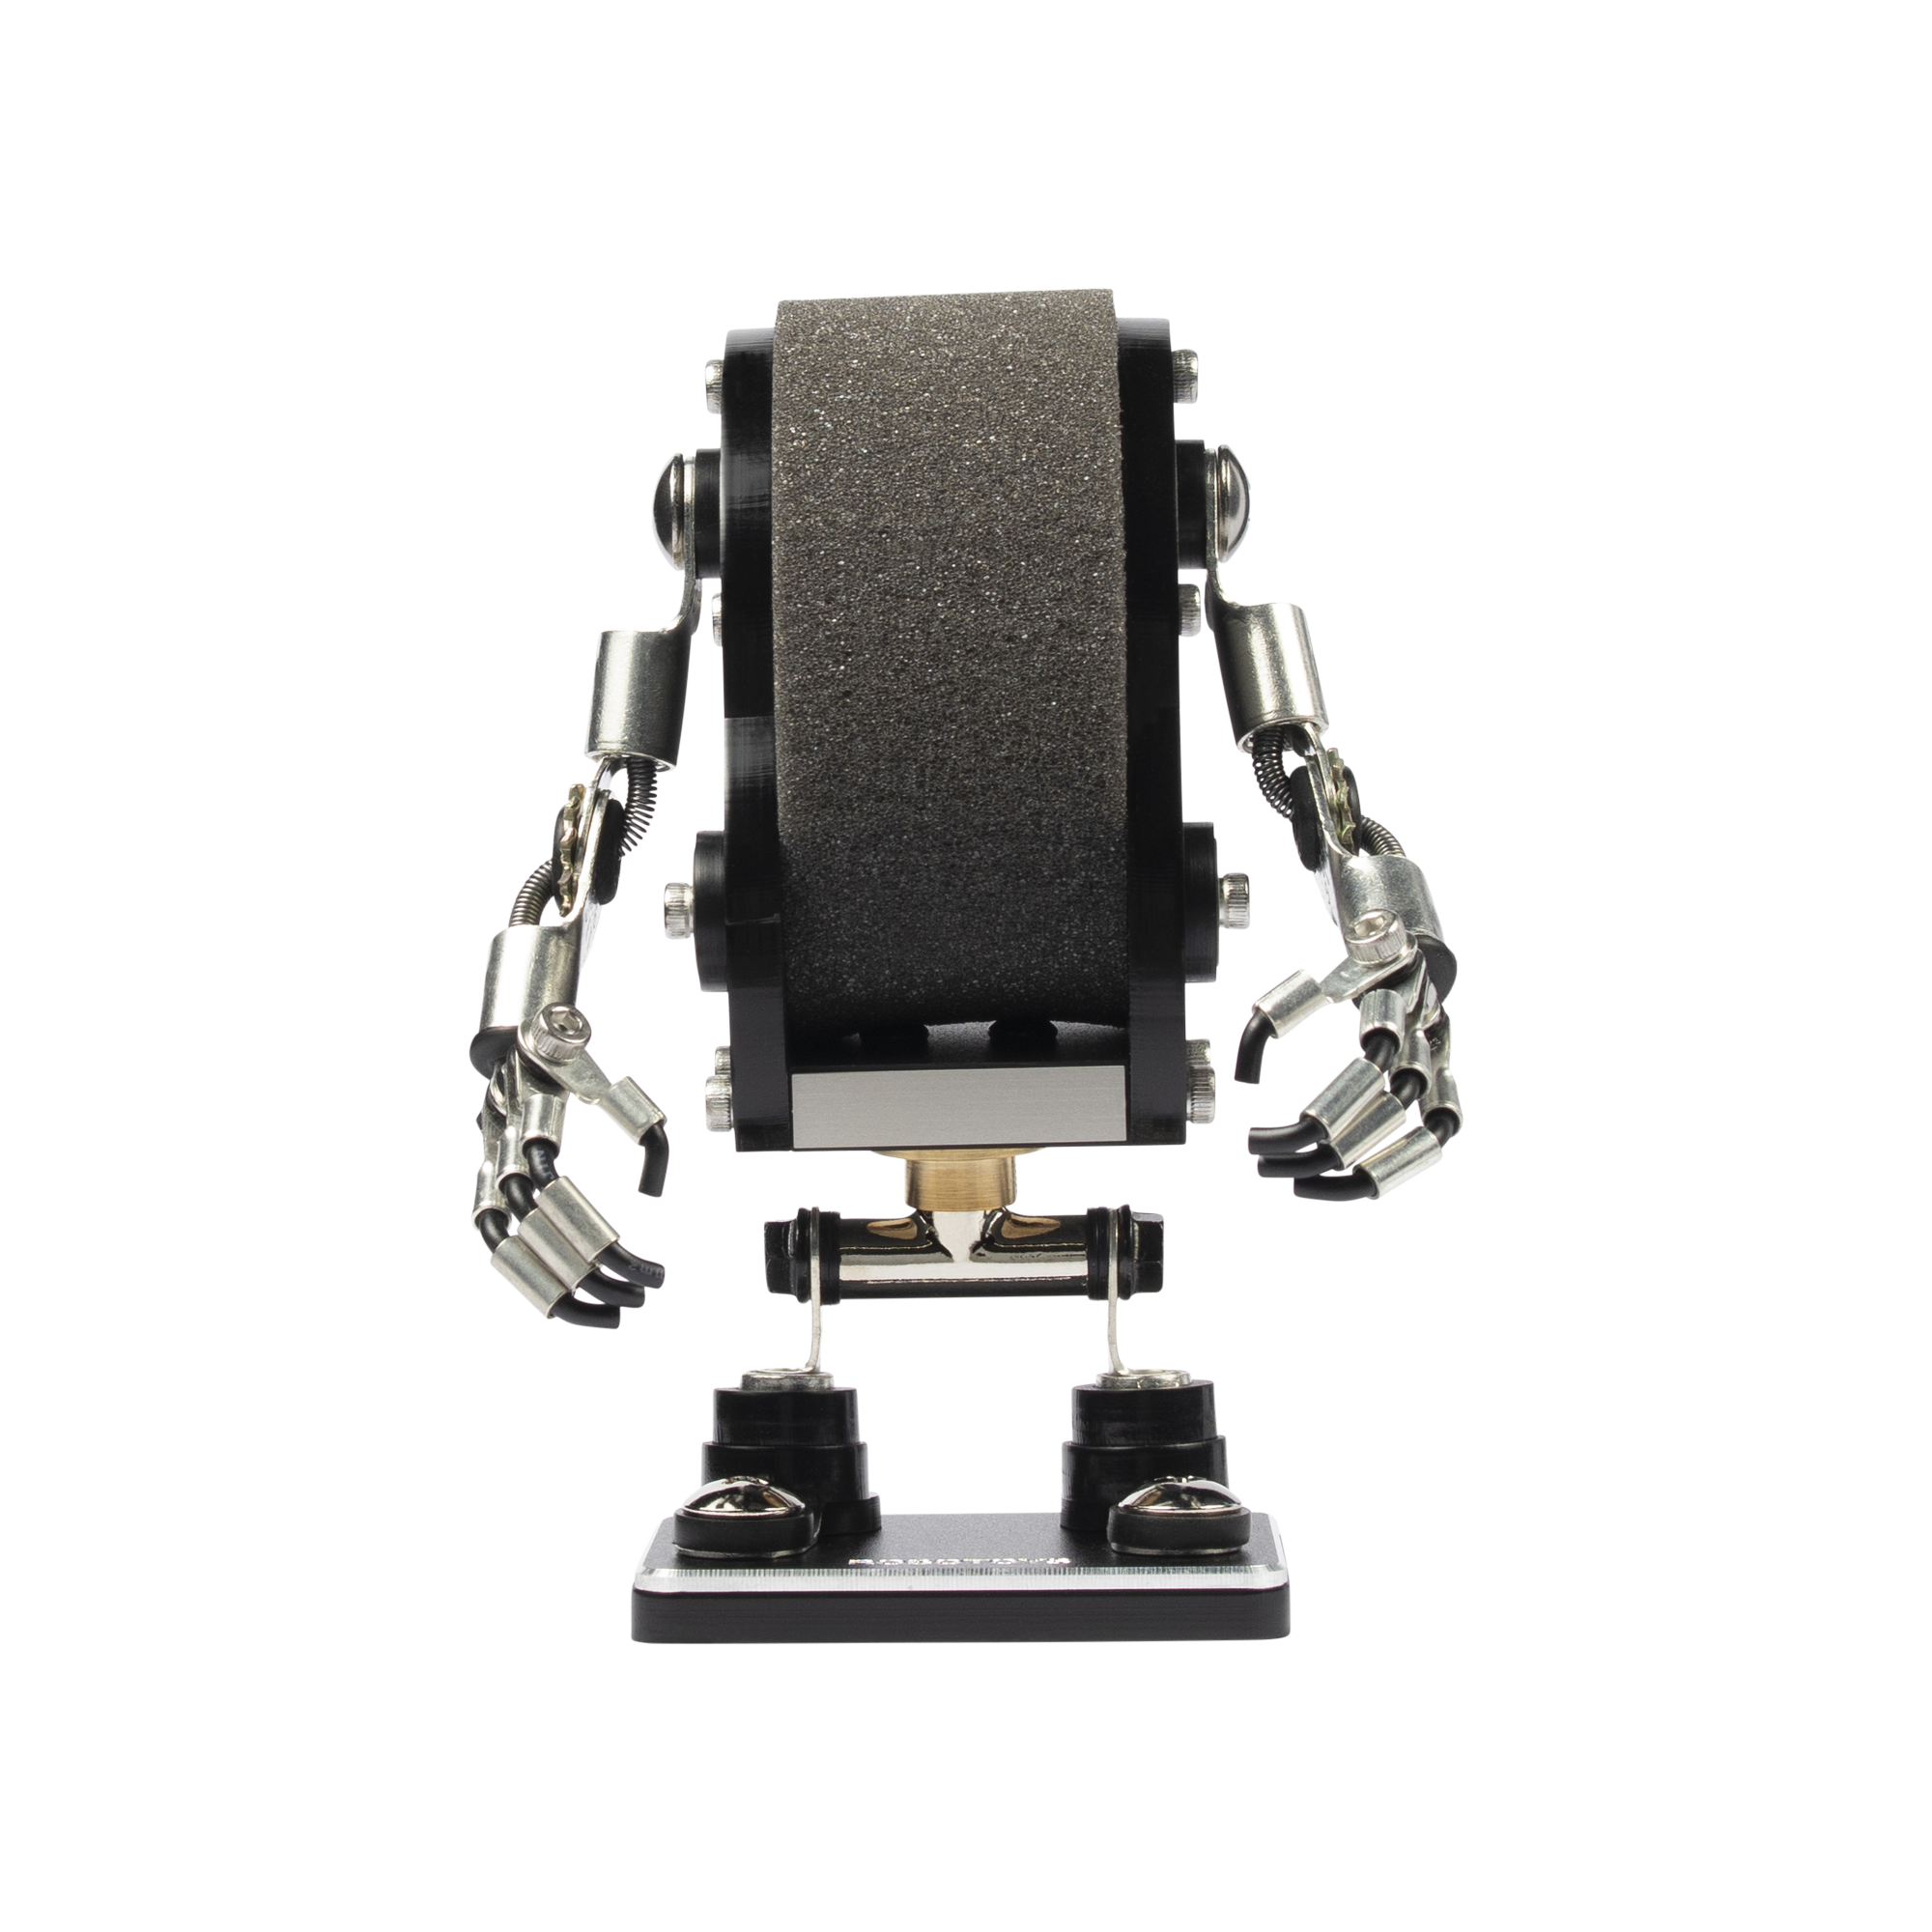 [RoboToys] Watch Stand - Minibot - Black